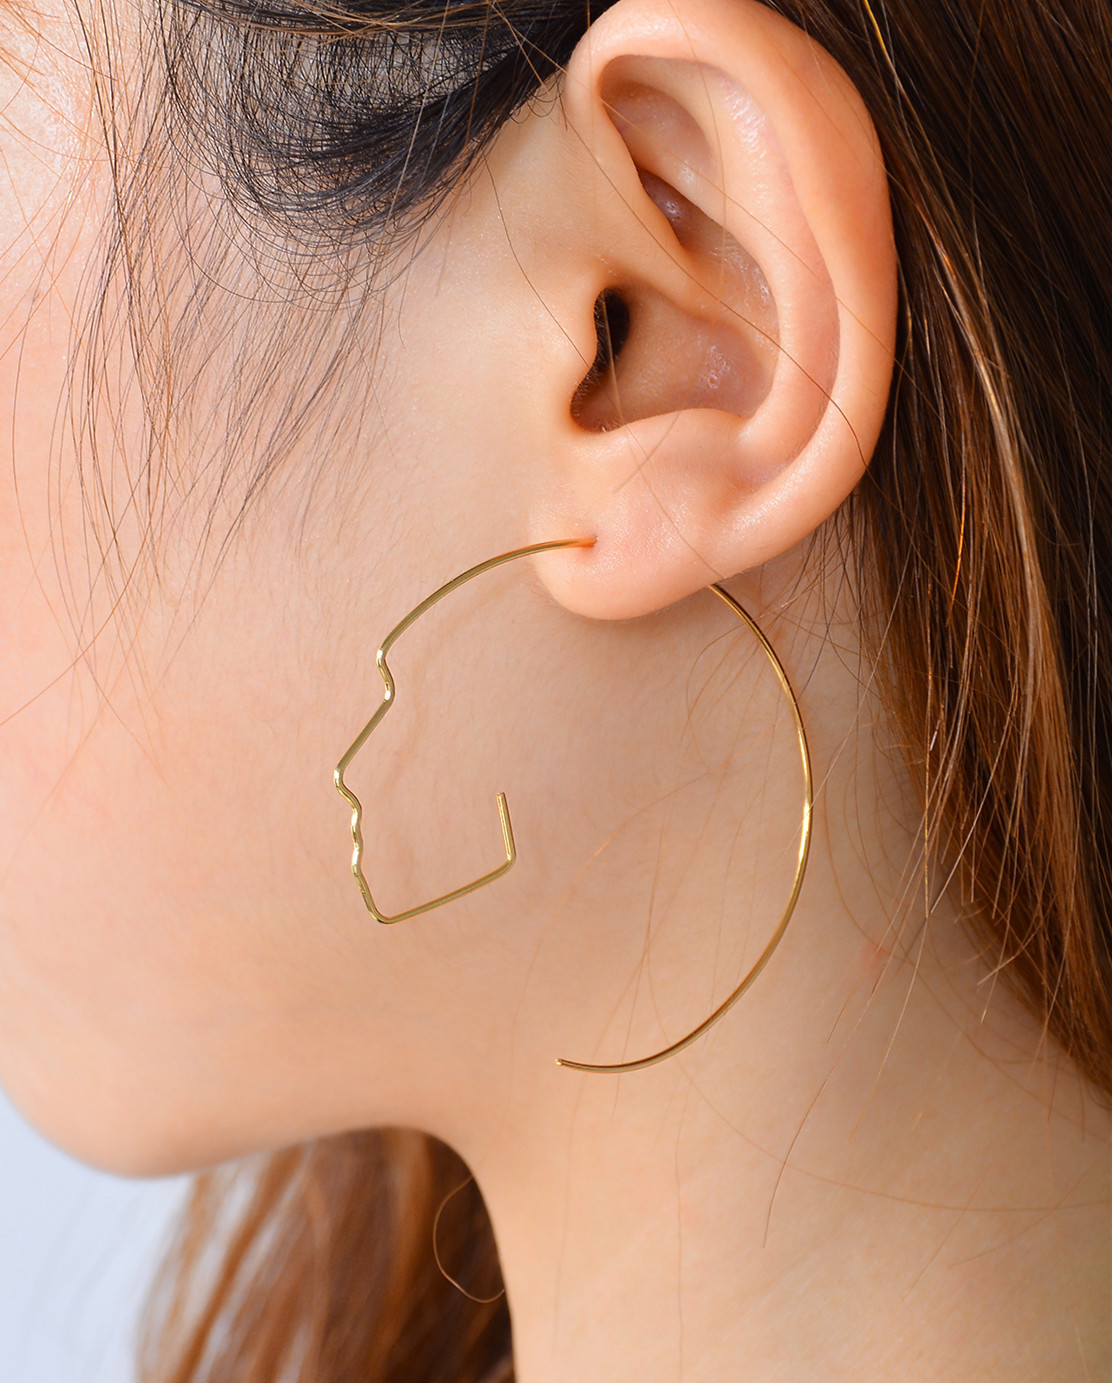 Personalized Metal Piercing Earrings